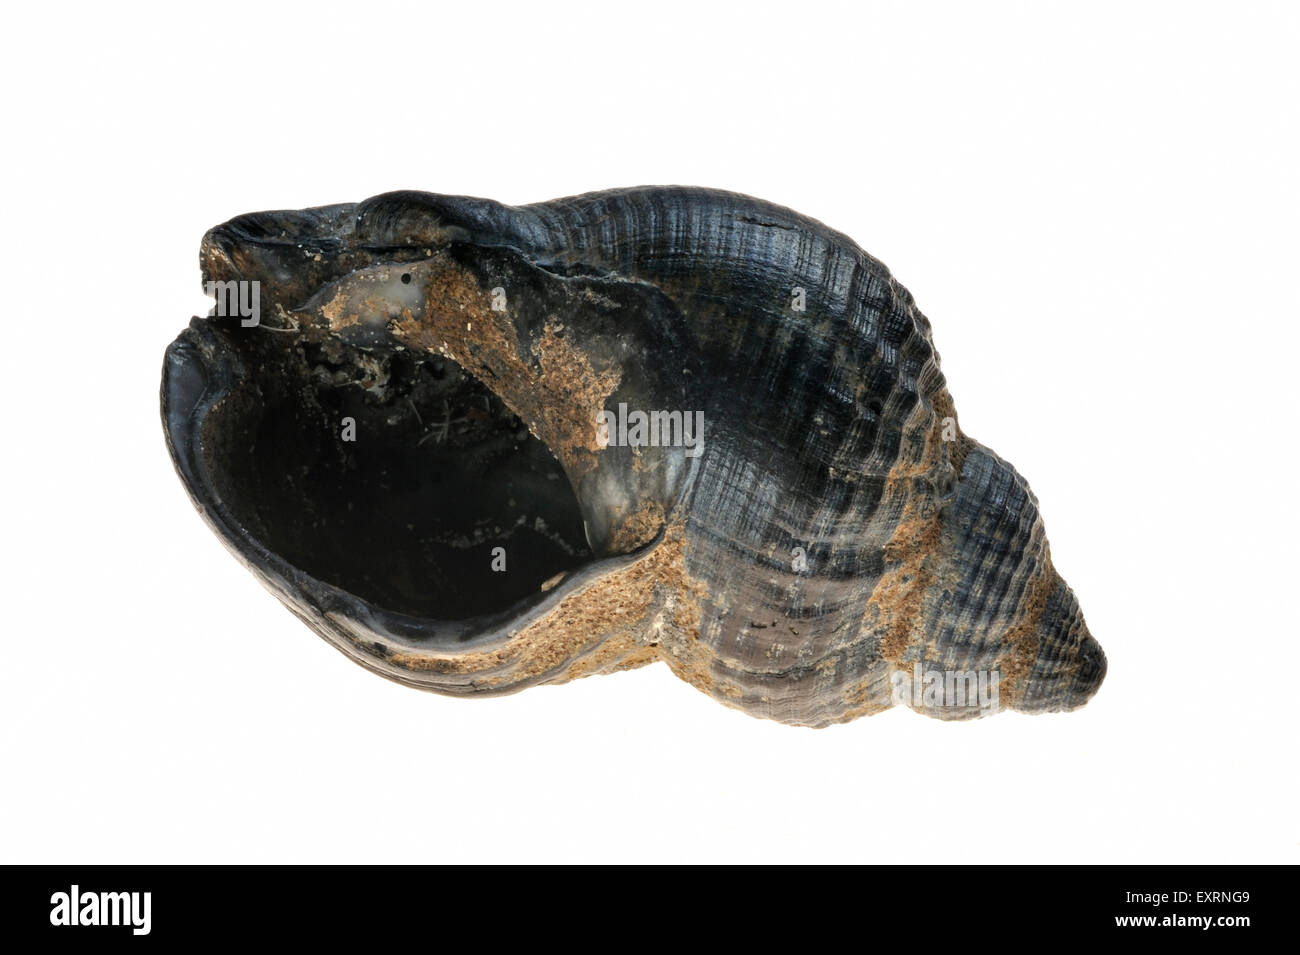 Common whelk (Buccinum undatum) shell on white background Stock Photo